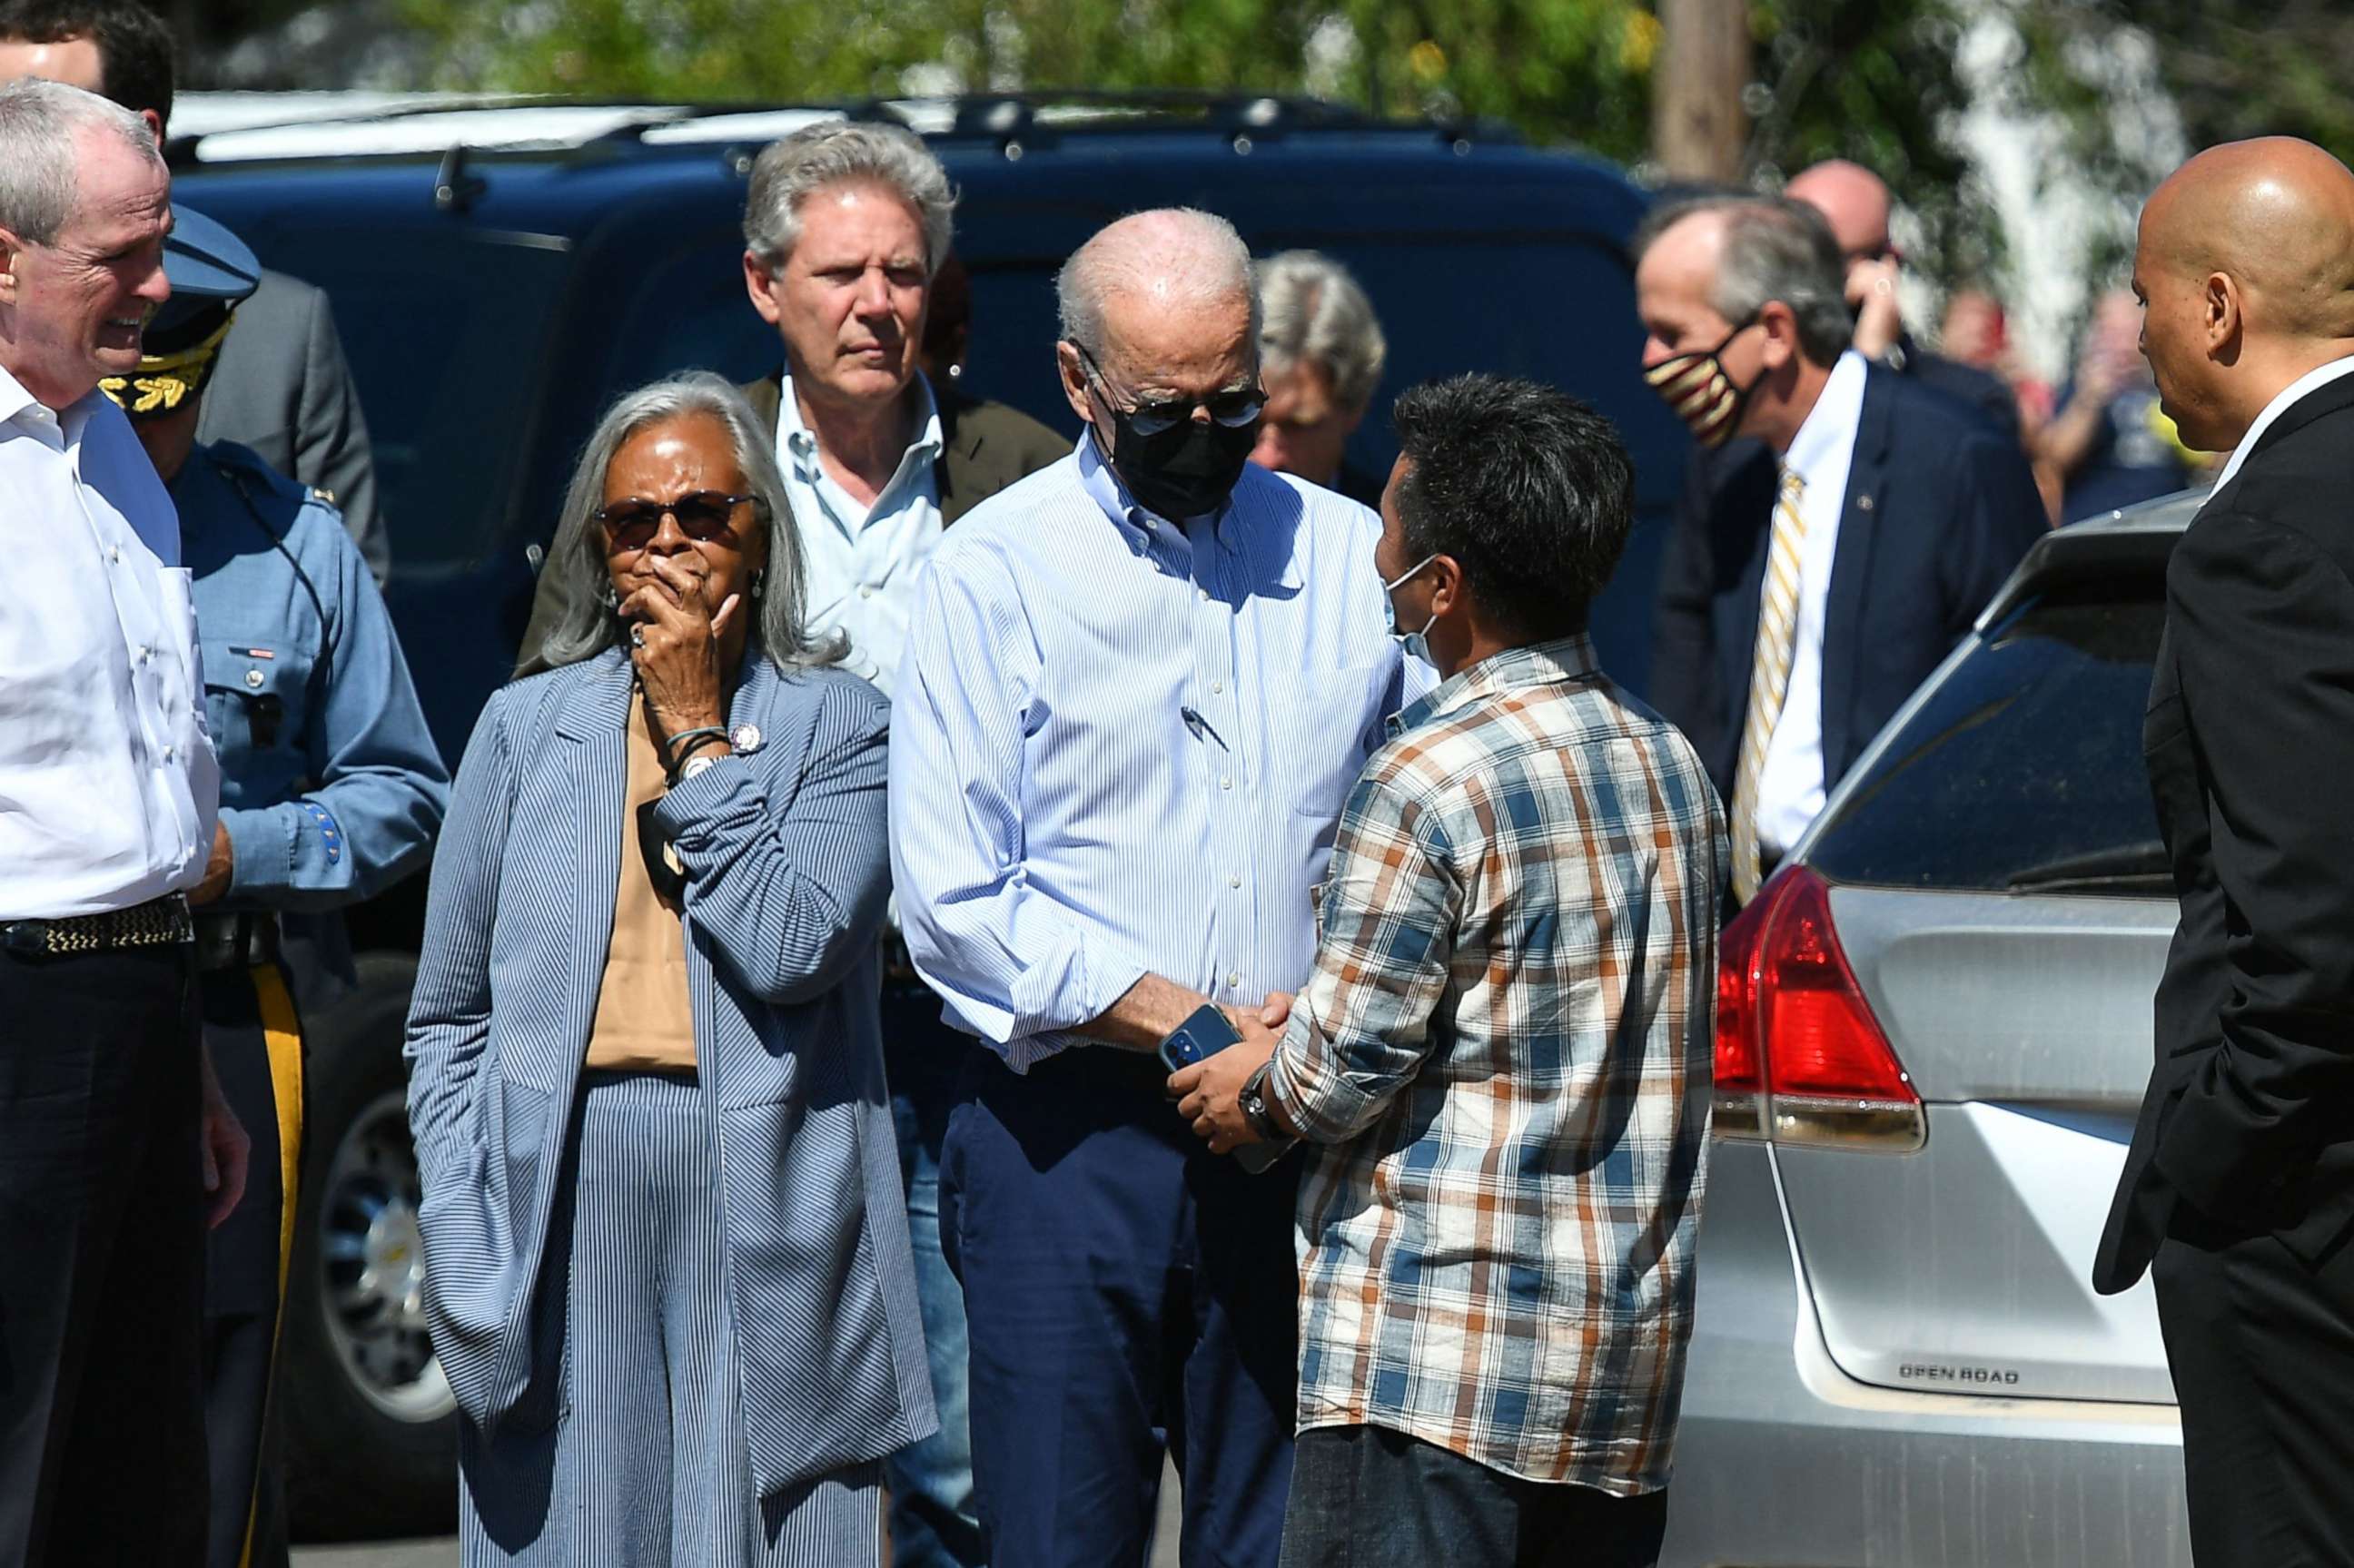 PHOTO: President Joe Biden greets a resident as he tours a neighborhood affected by Hurricane Ida in Manville, New Jersey, Sept. 7, 2021.